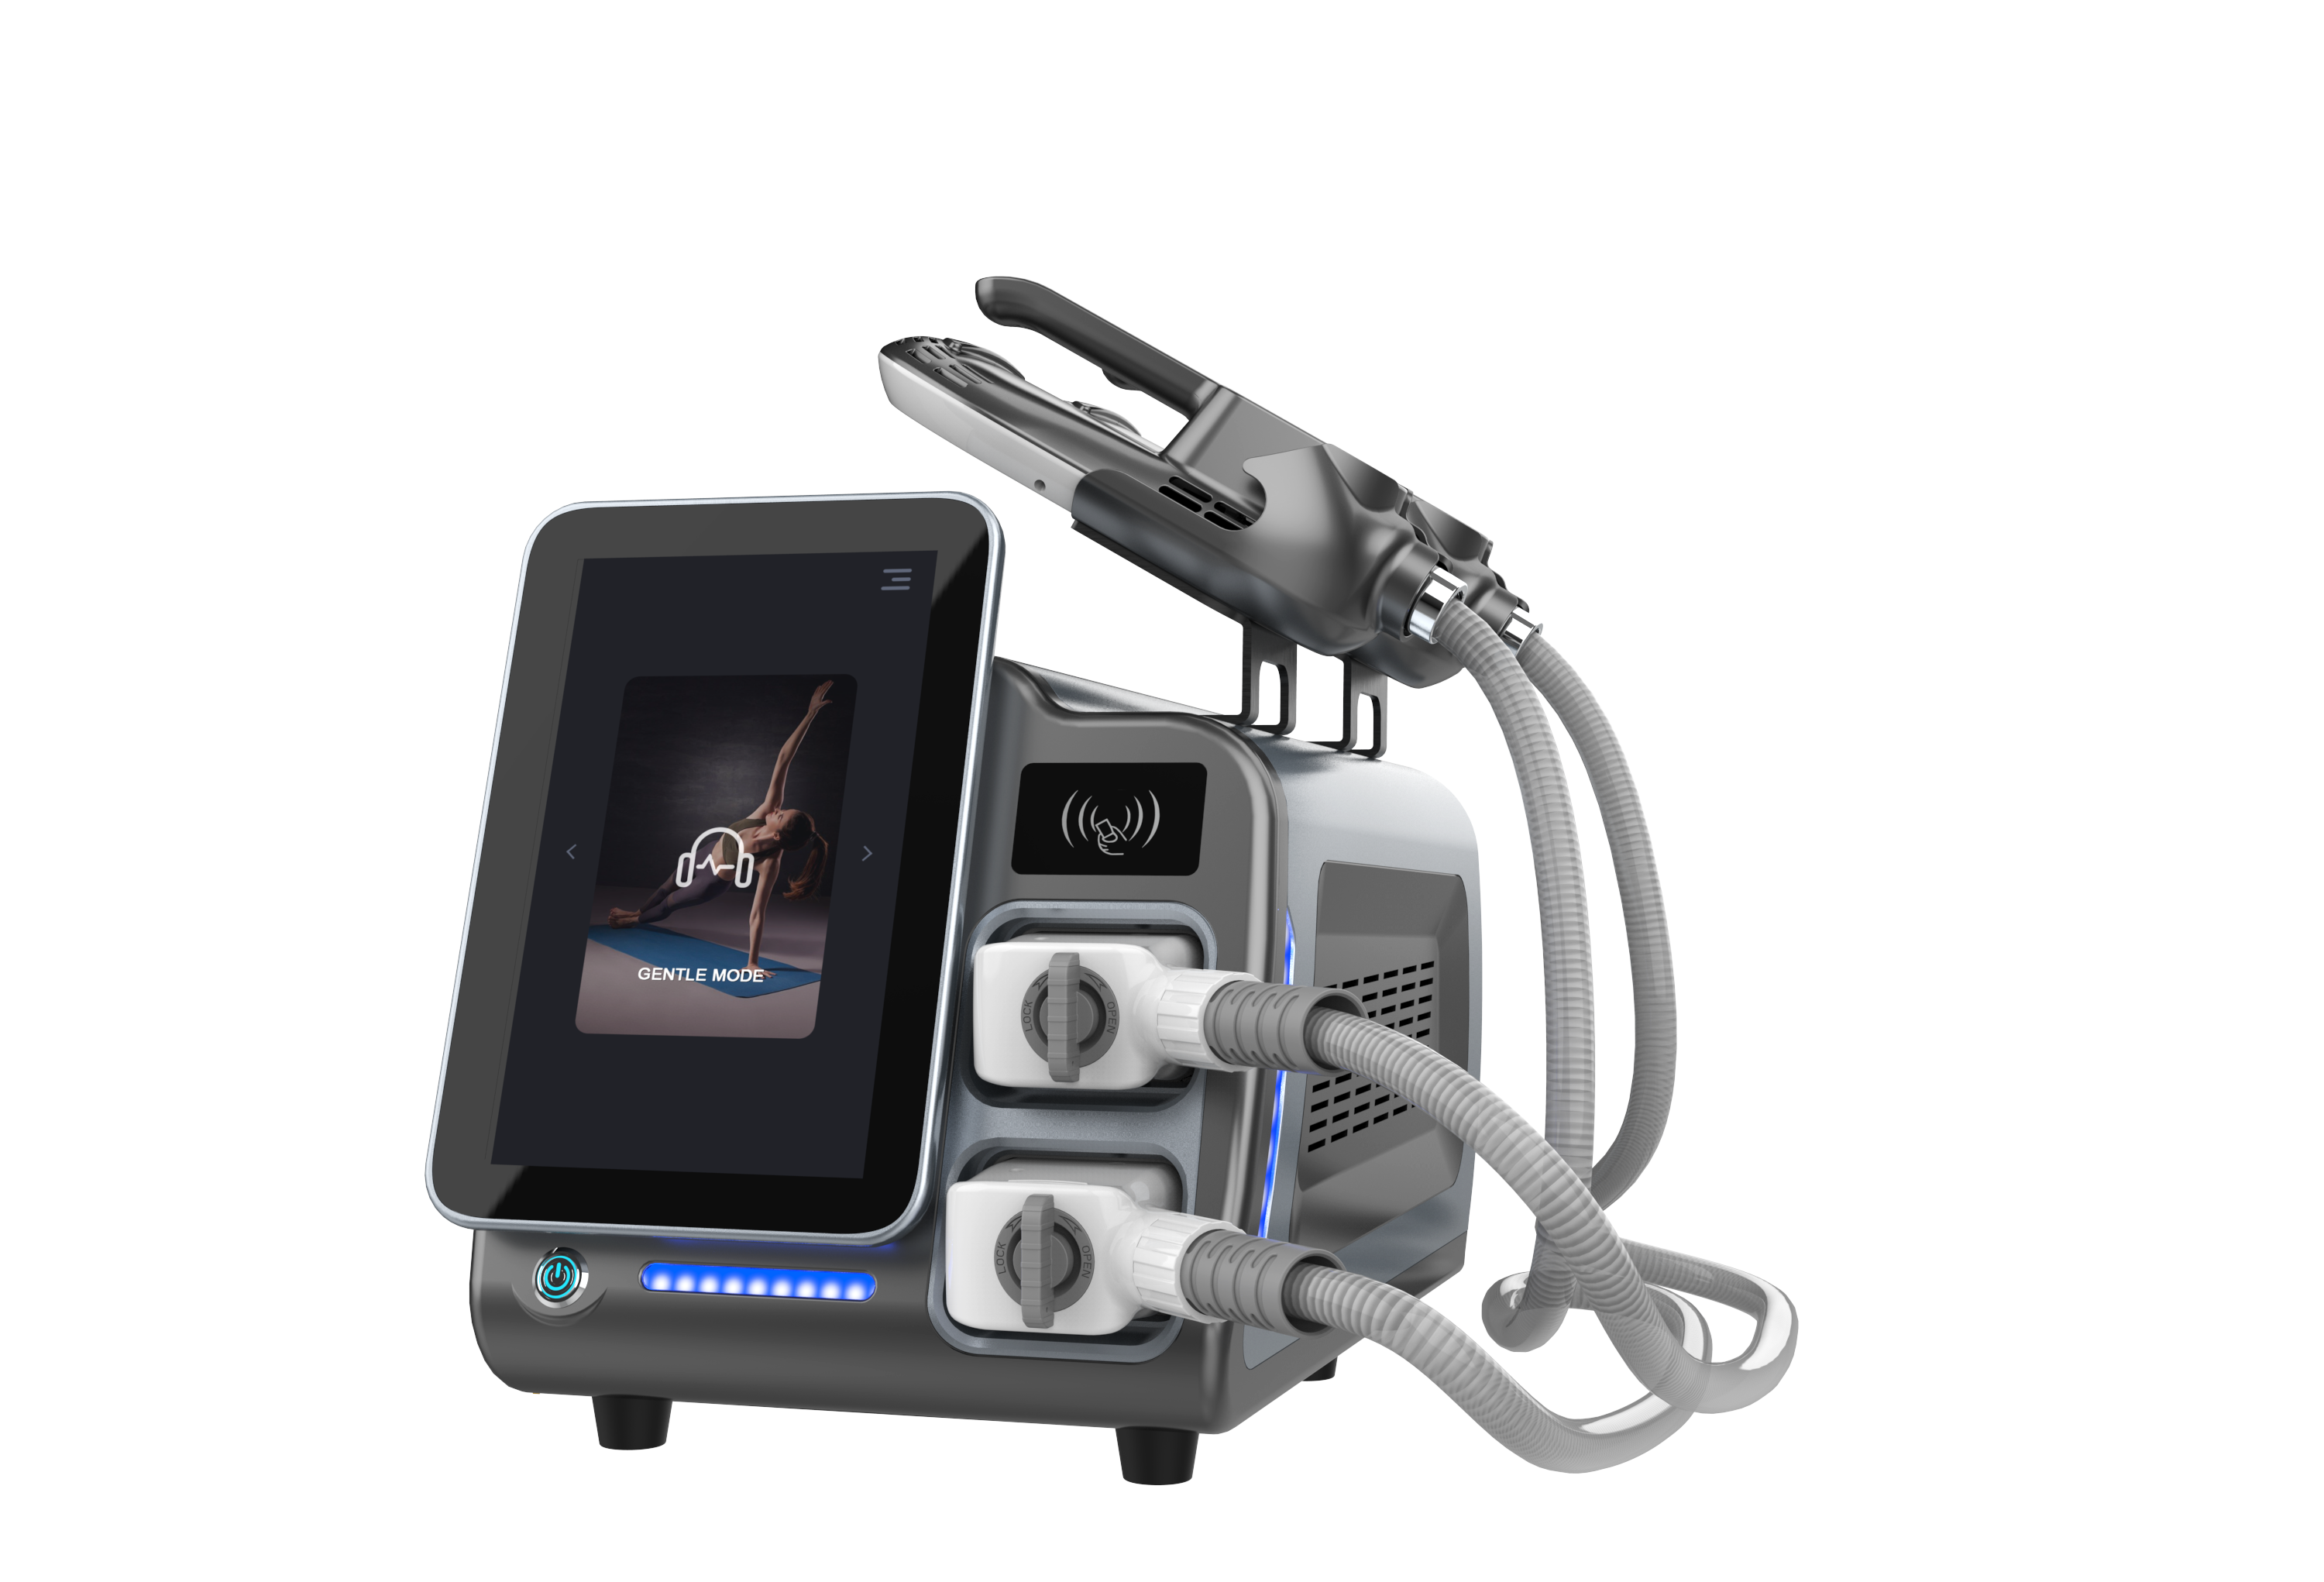 Portable High Frequency teslasculpt Hi-Emt Body Muscle Stimulation ems sculpt Machine Featured Image